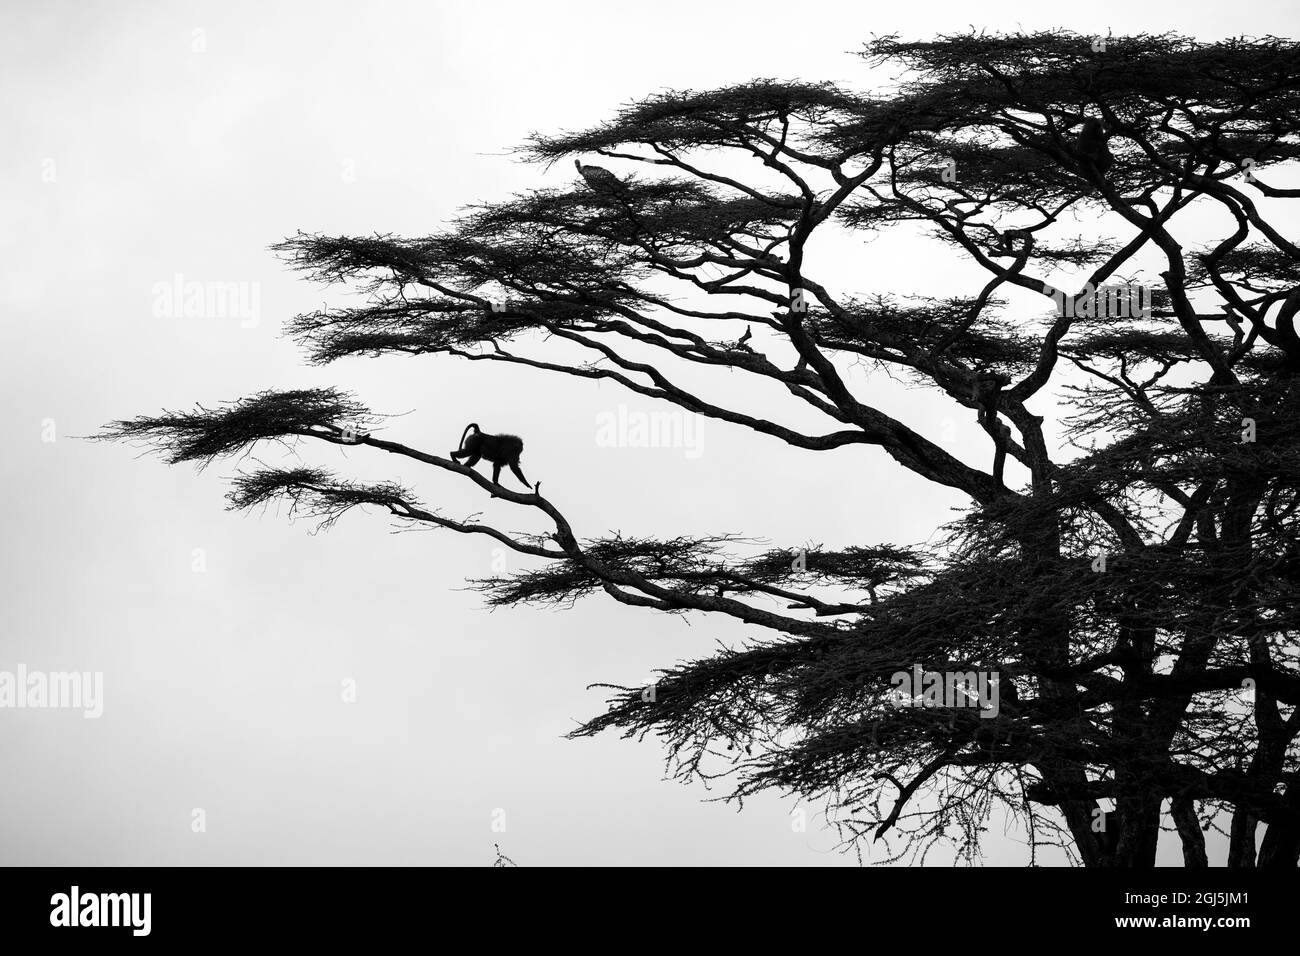 Africa, Tanzania, Ndutu Conservation Area, Adult Male Chacma Baboon (Papio ursinus) climbing down limb of acacia tree along Ndutu Plains Stock Photo